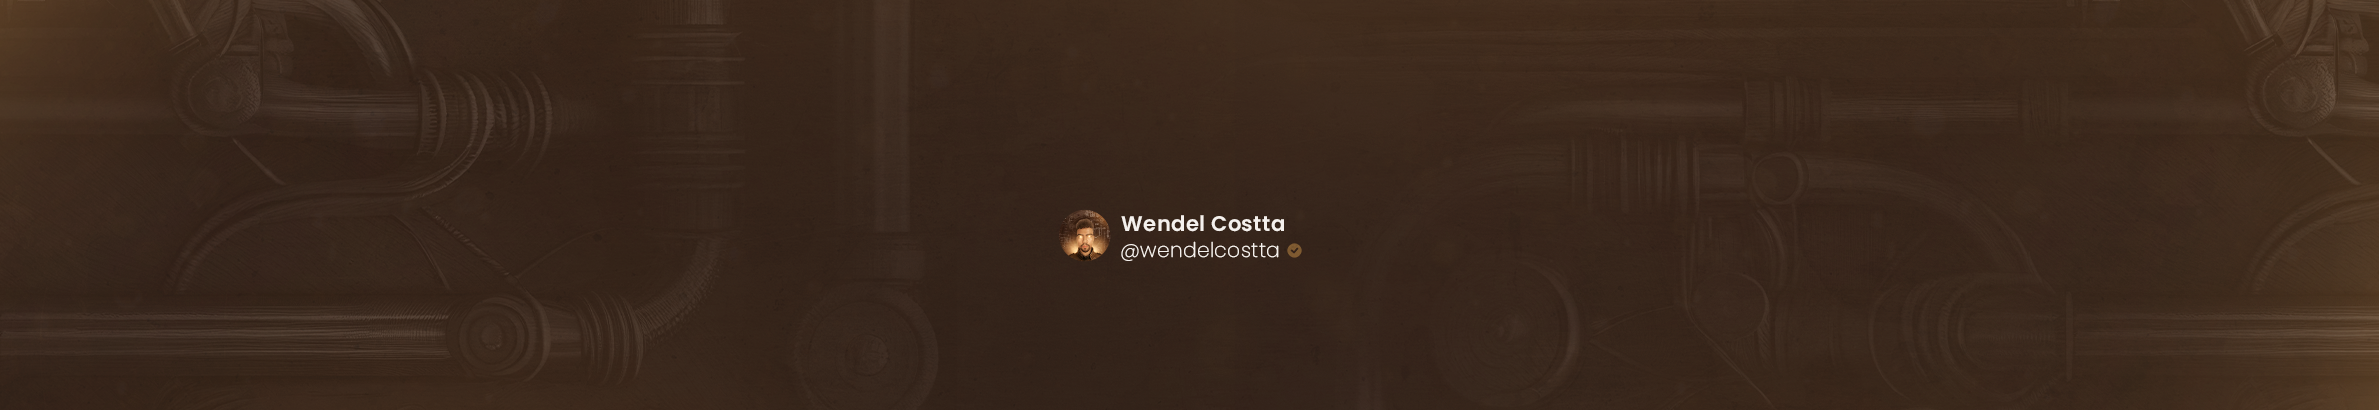 Baner profilu użytkownika Wendel Costta